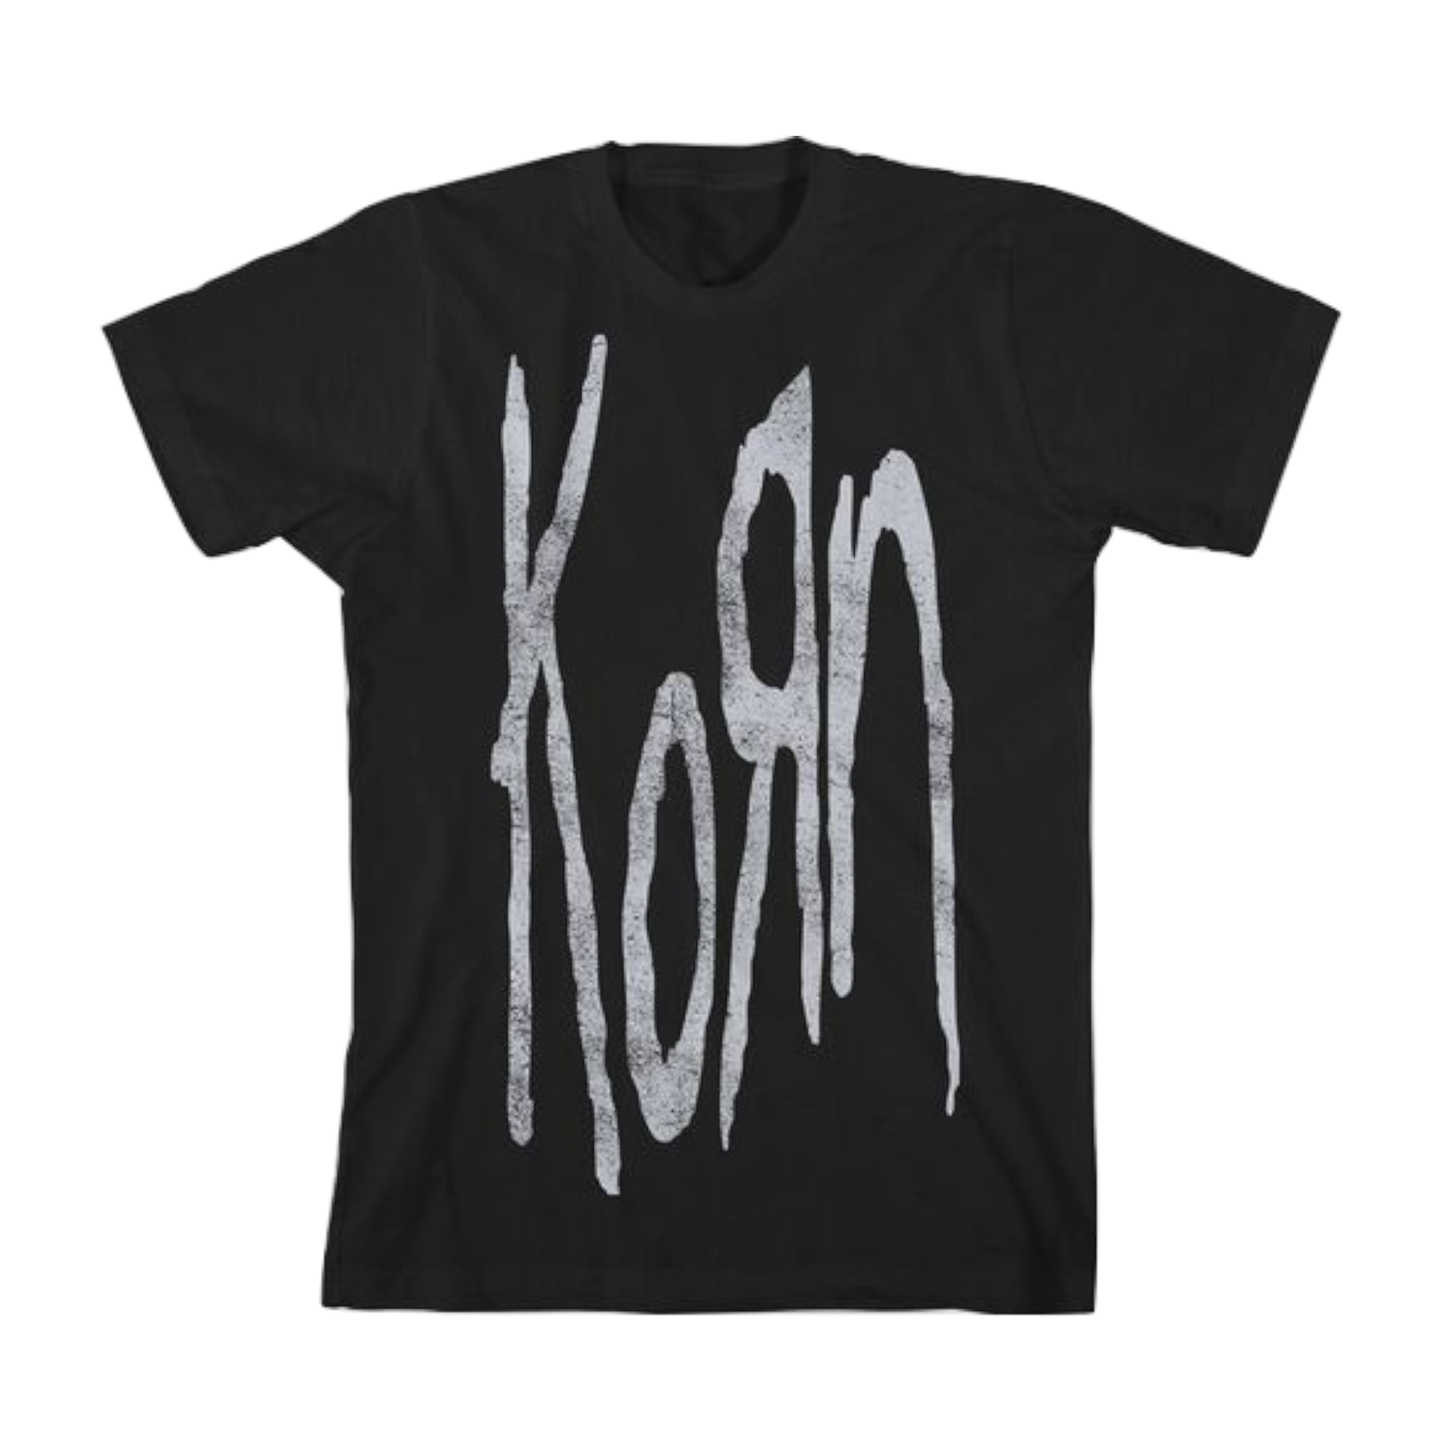 Korn Logo T-Shirt